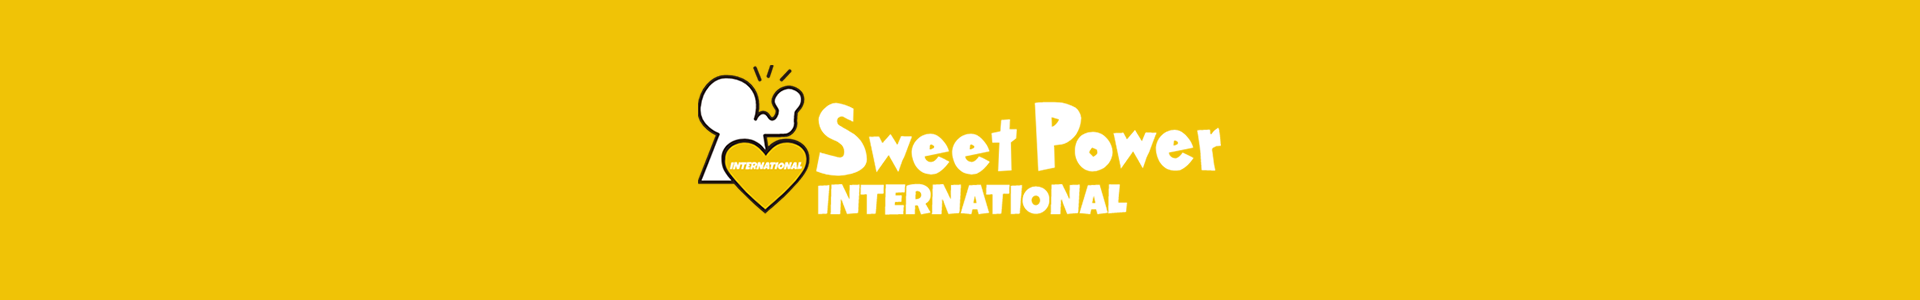 sweet power international